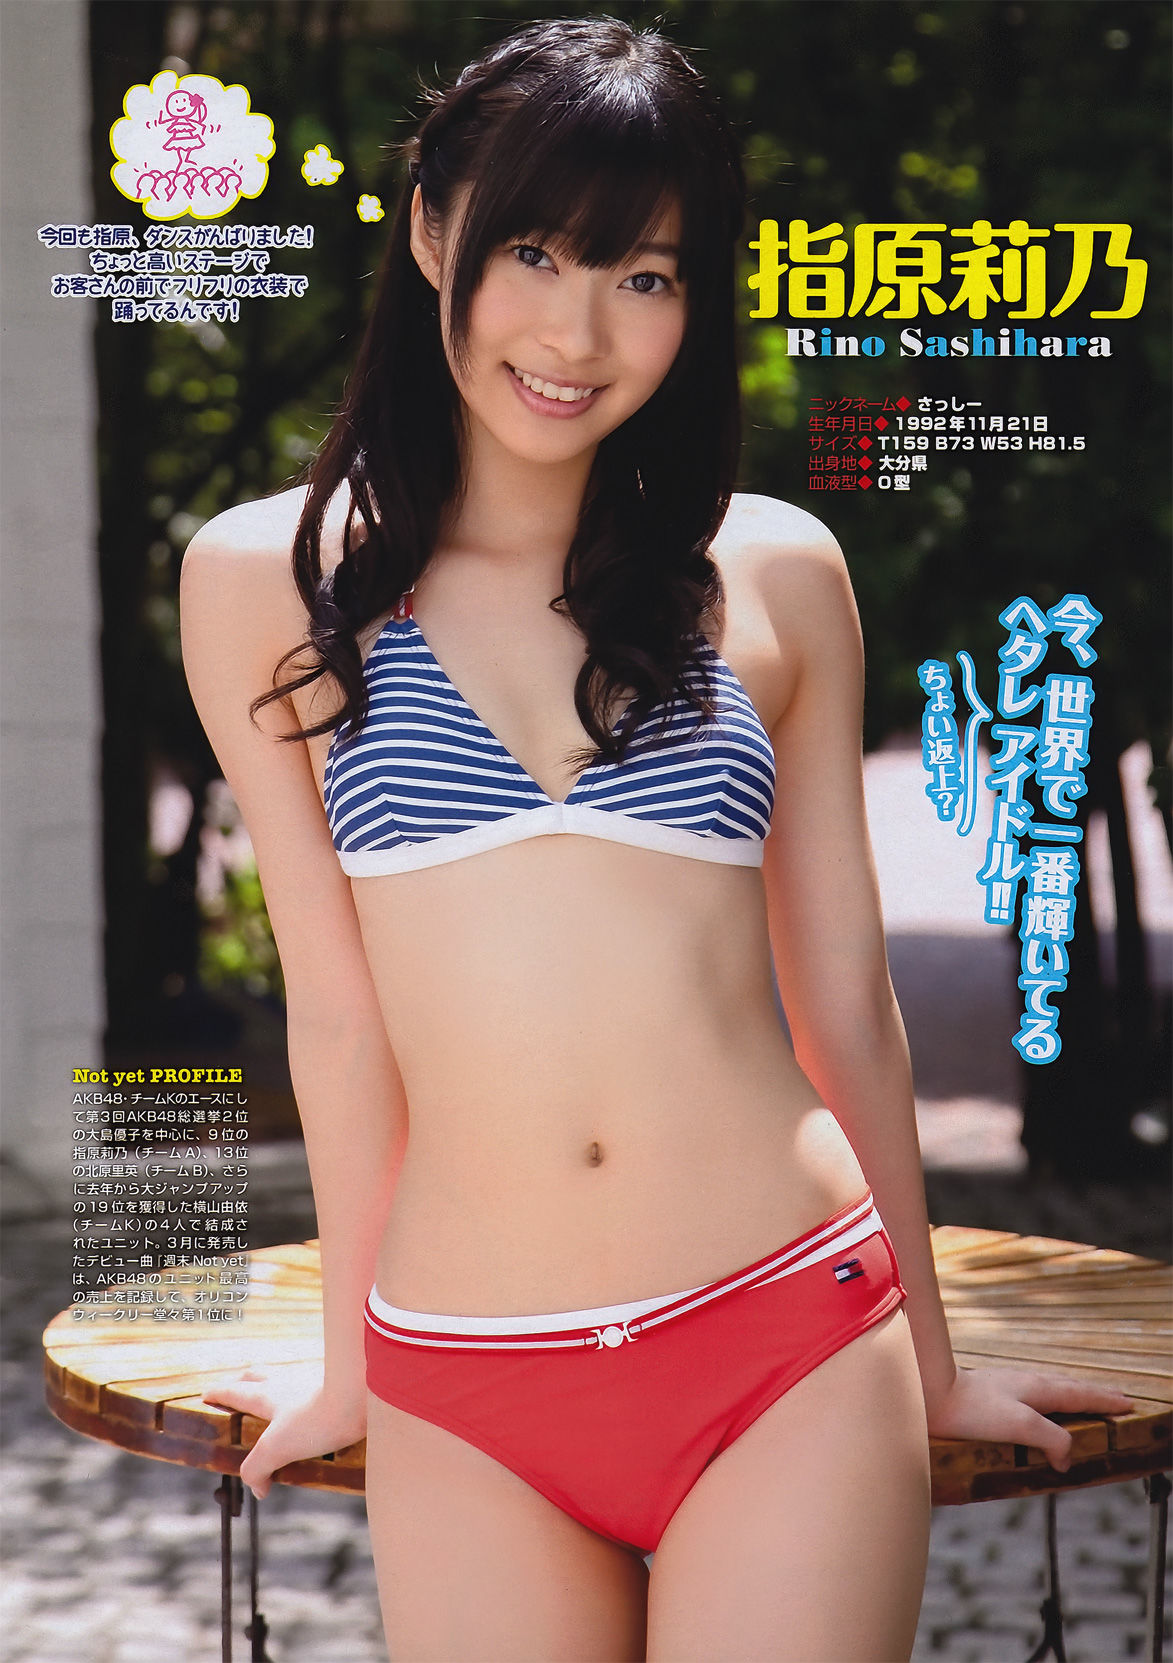 [Young Magazine]杂志:野津友那乃高品质写真大图收藏合集(18P)